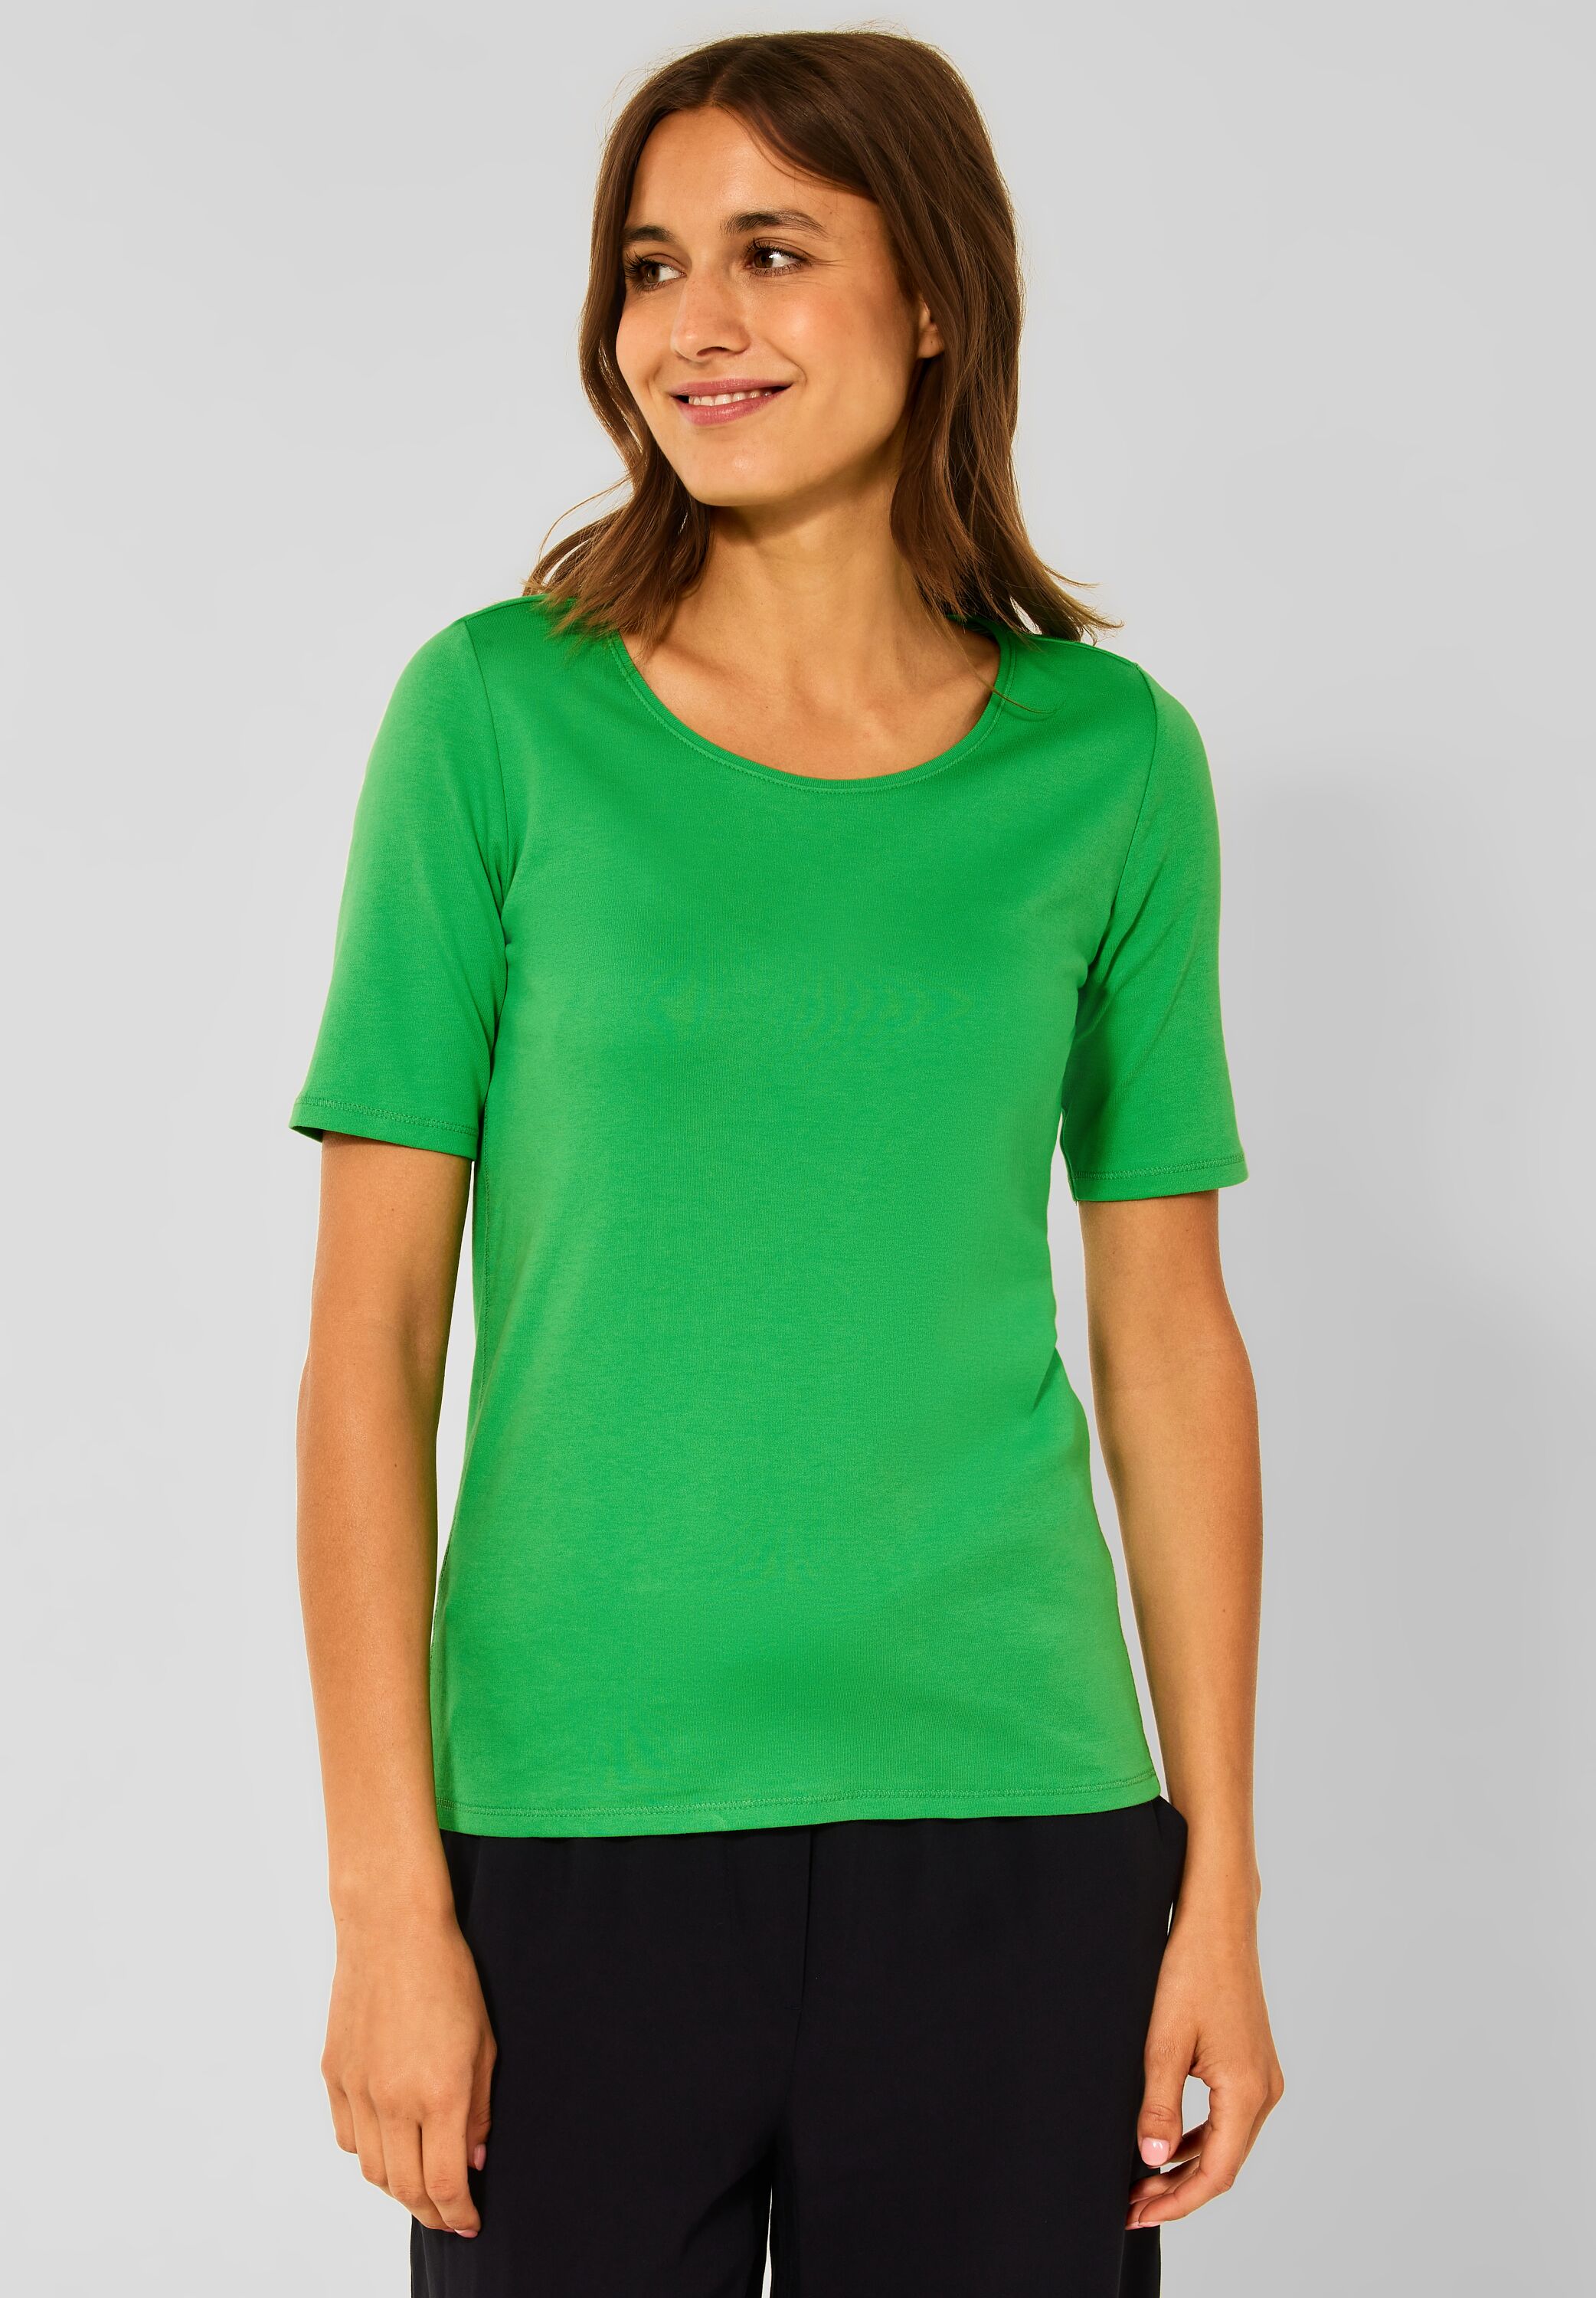 CECIL Green im - T-Shirt SALE Lena Mode CONCEPT in B317515-13986 reduziert Radiant